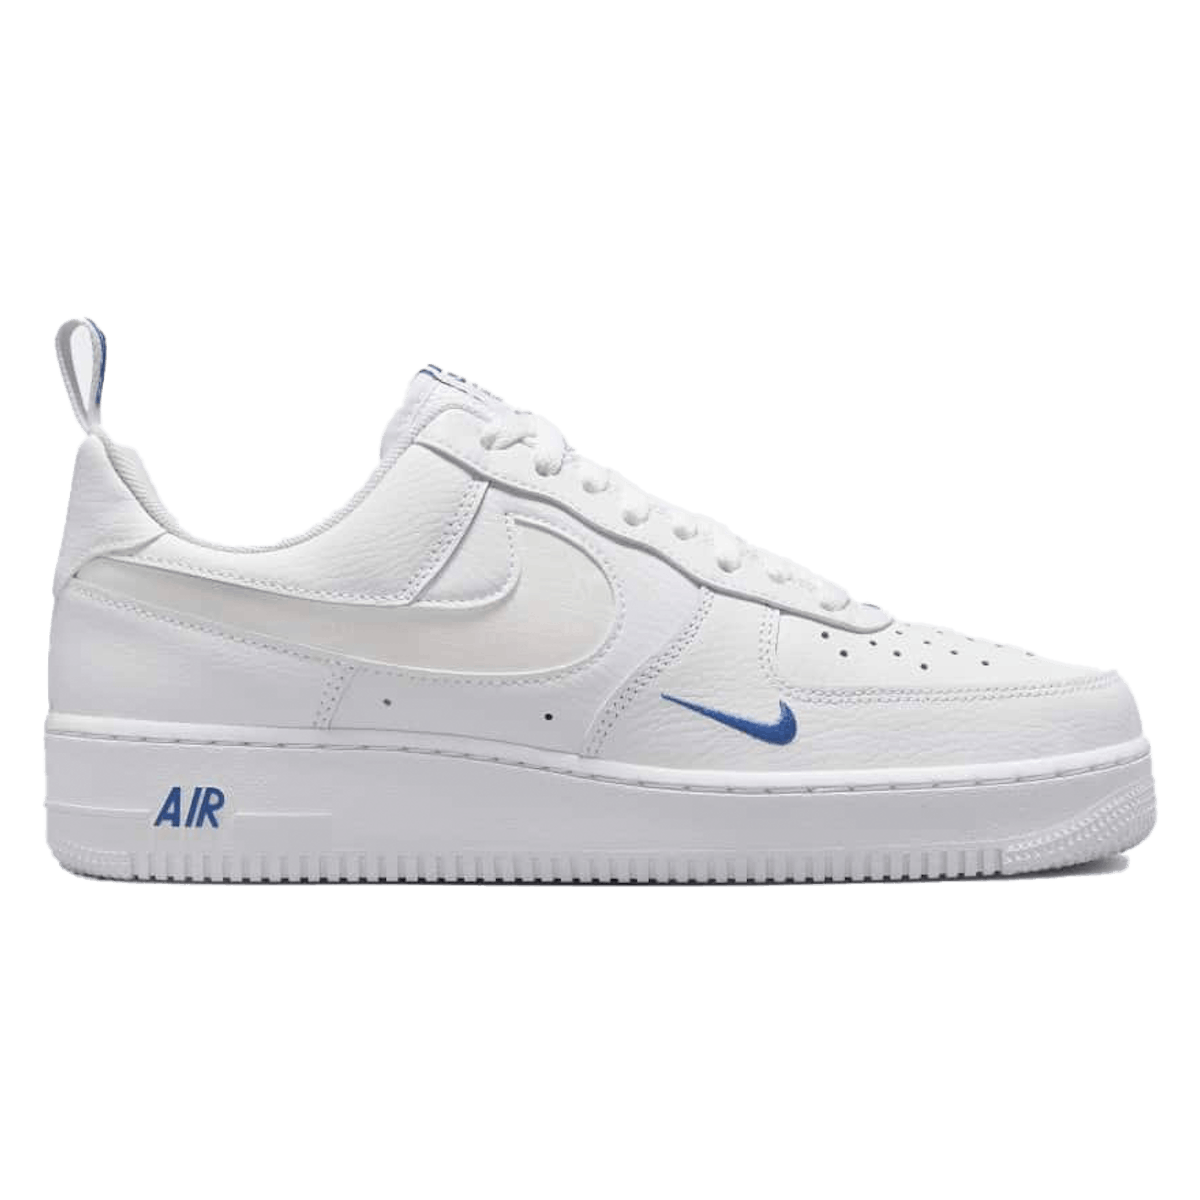 Nike Air Force 1 Reflective "White Marina Blue"